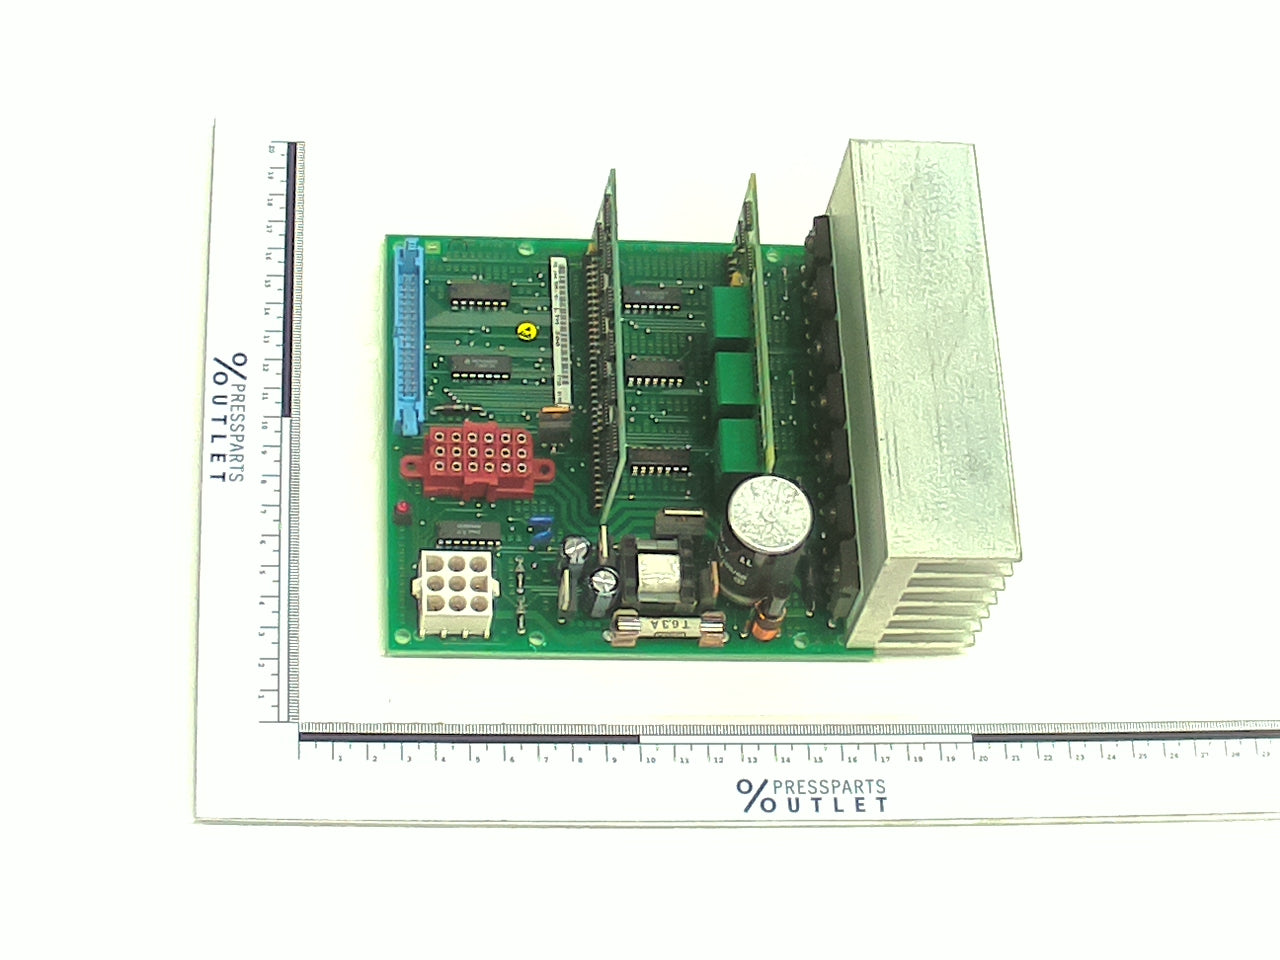 Power part module LTM 300 - M2.144.5051/01 - Leistungsmodul LTM 300